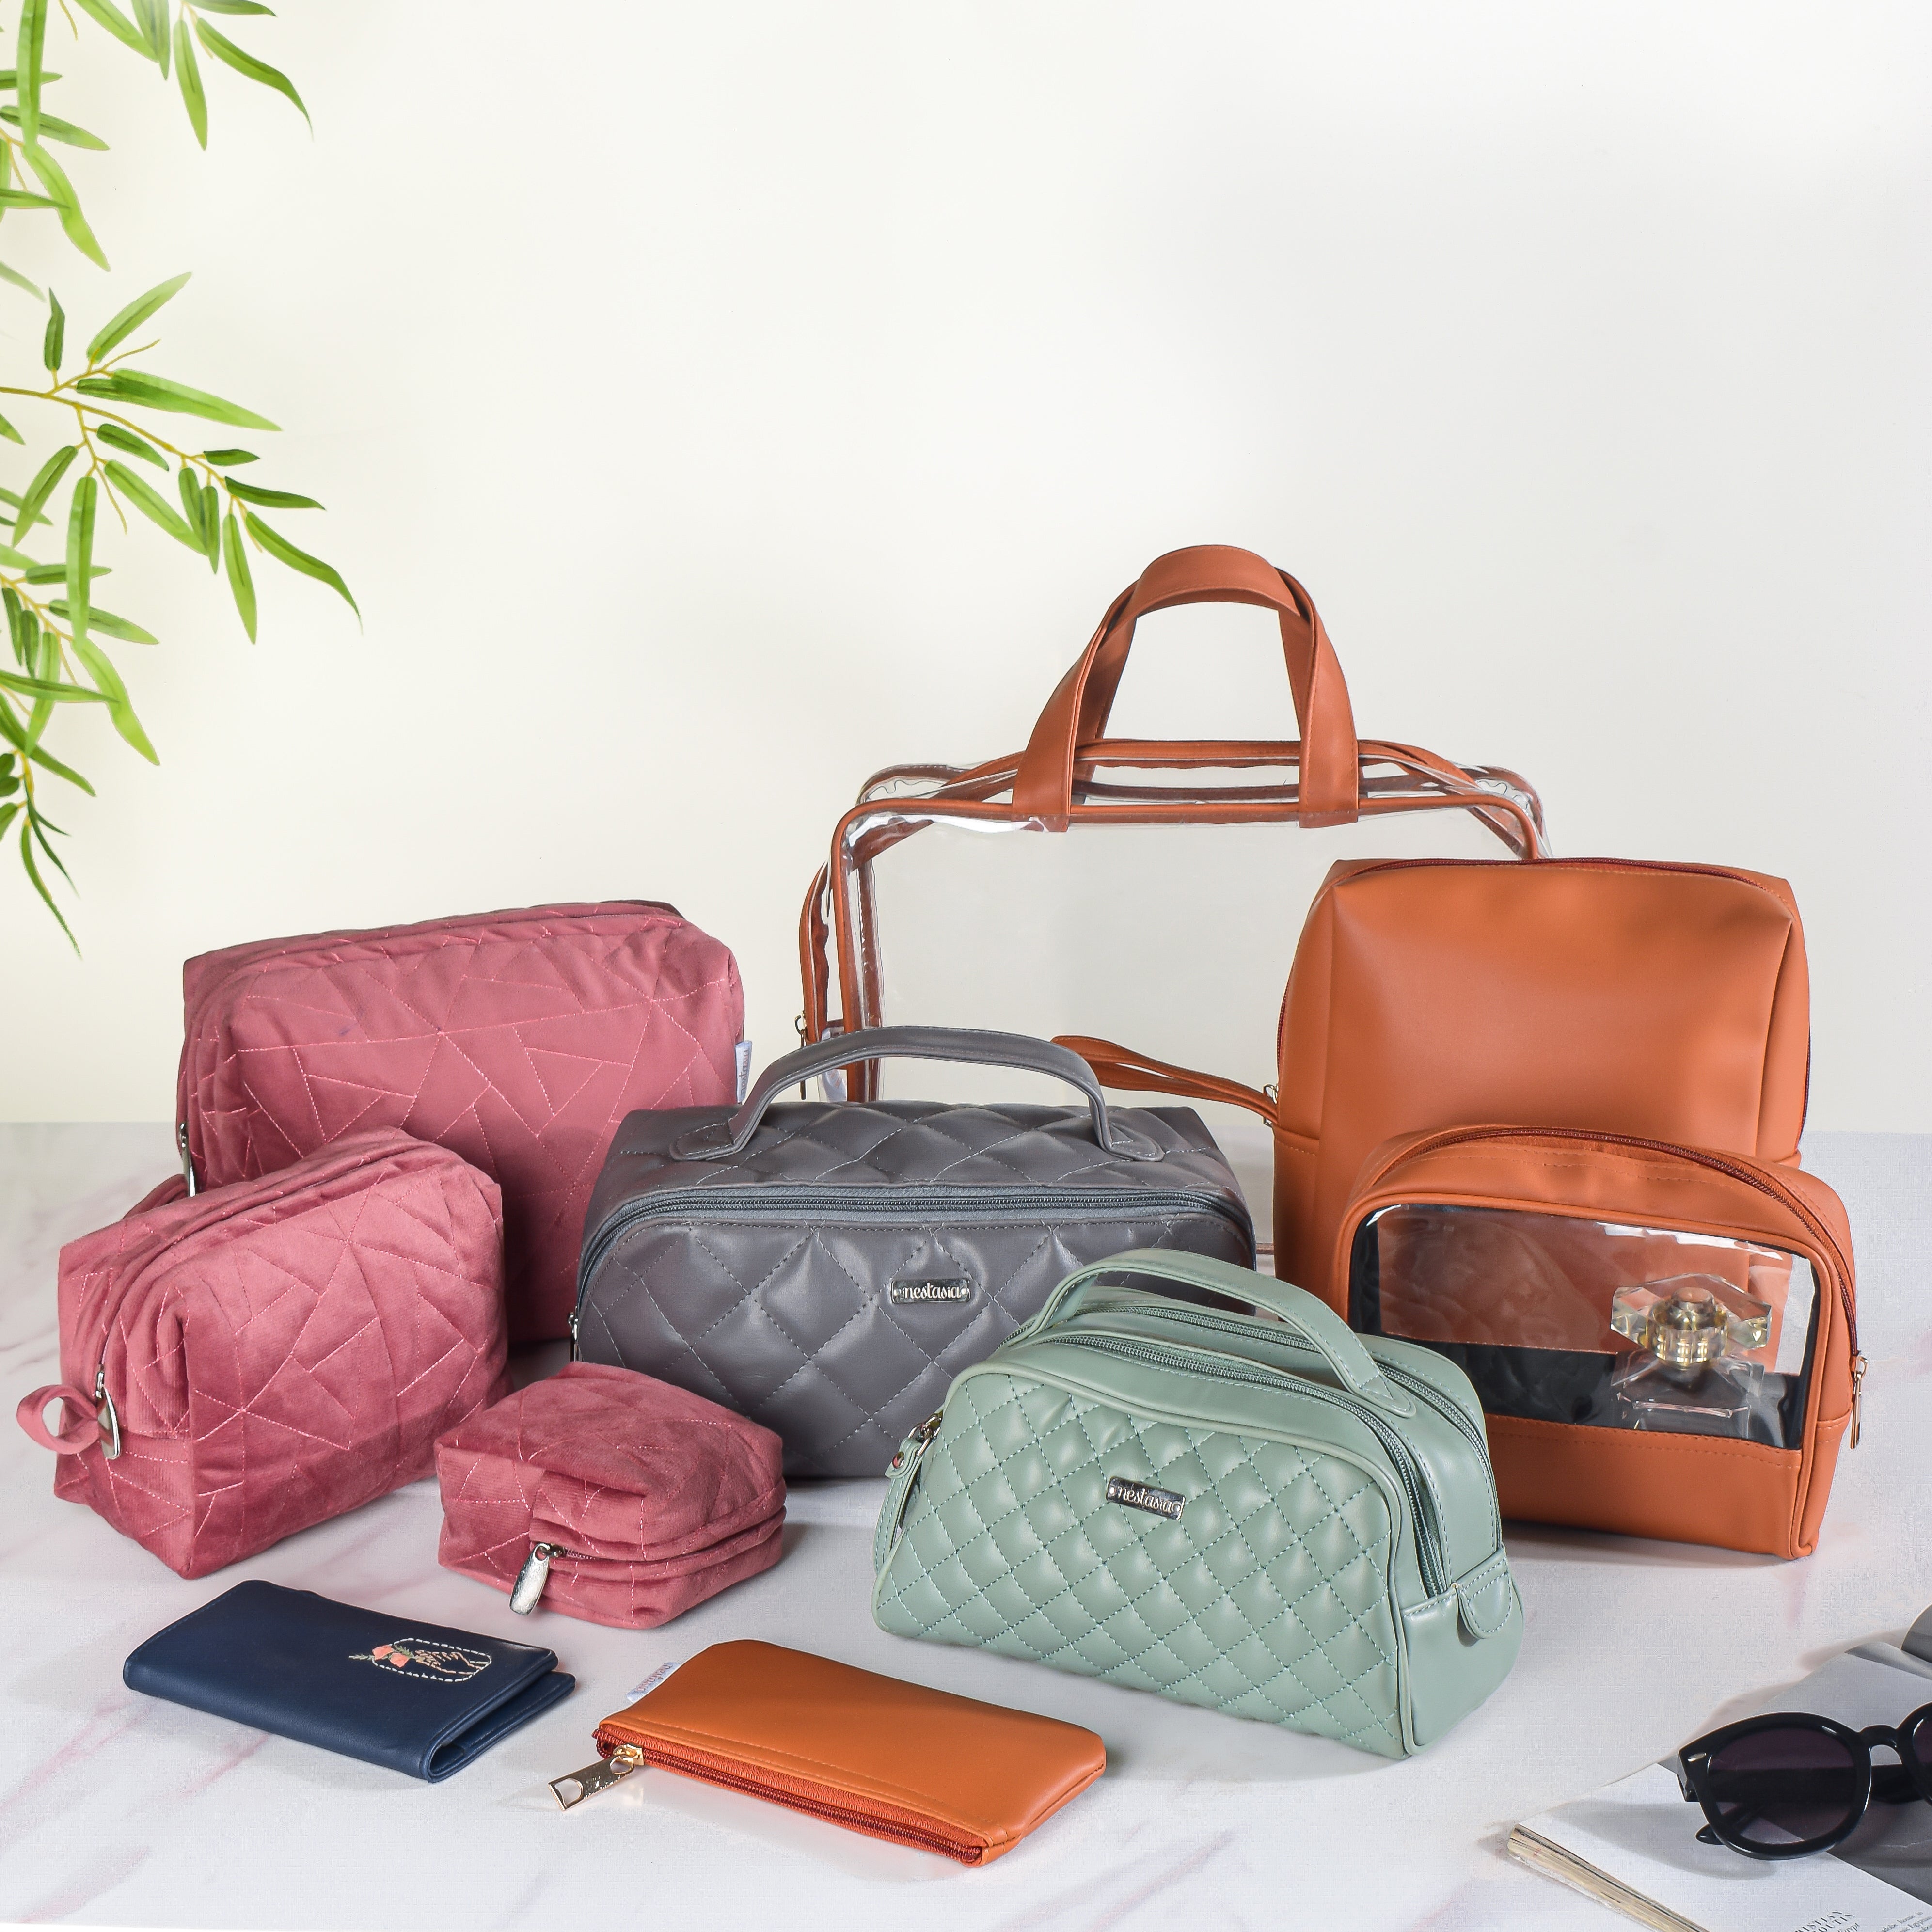 Guess Handbags, Wallets and Travel Bags